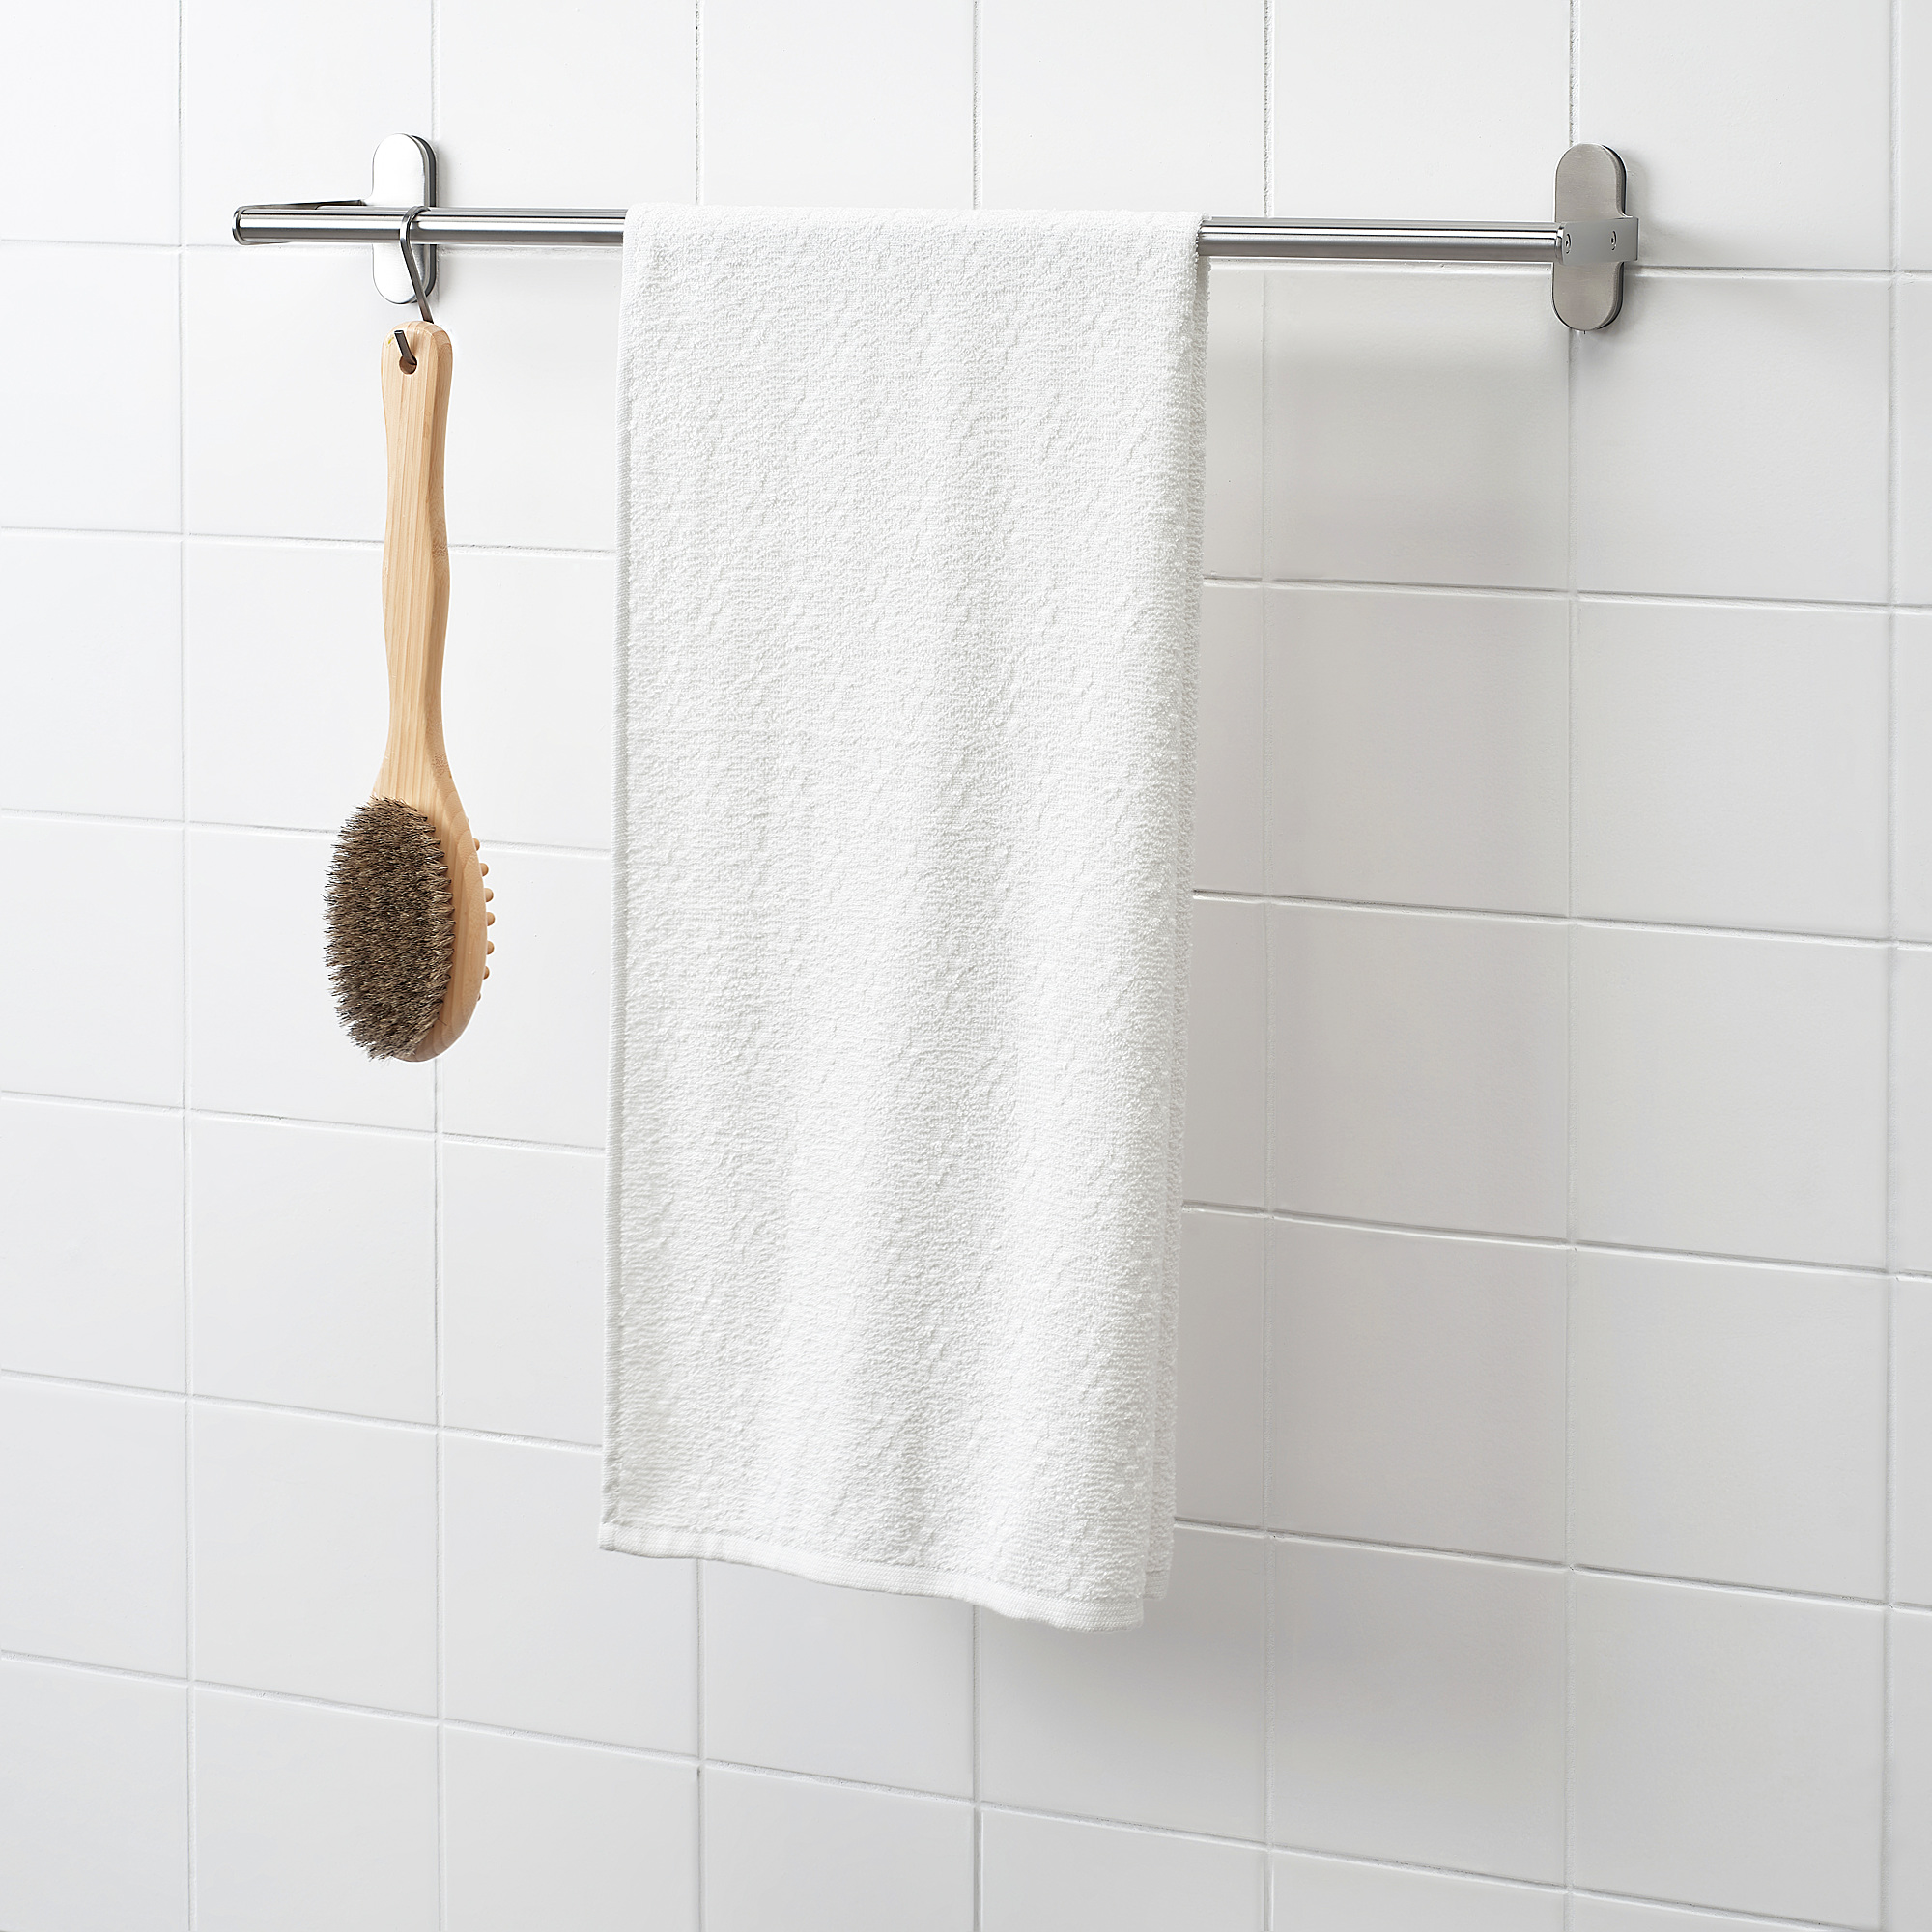 NÄRSEN bath towel